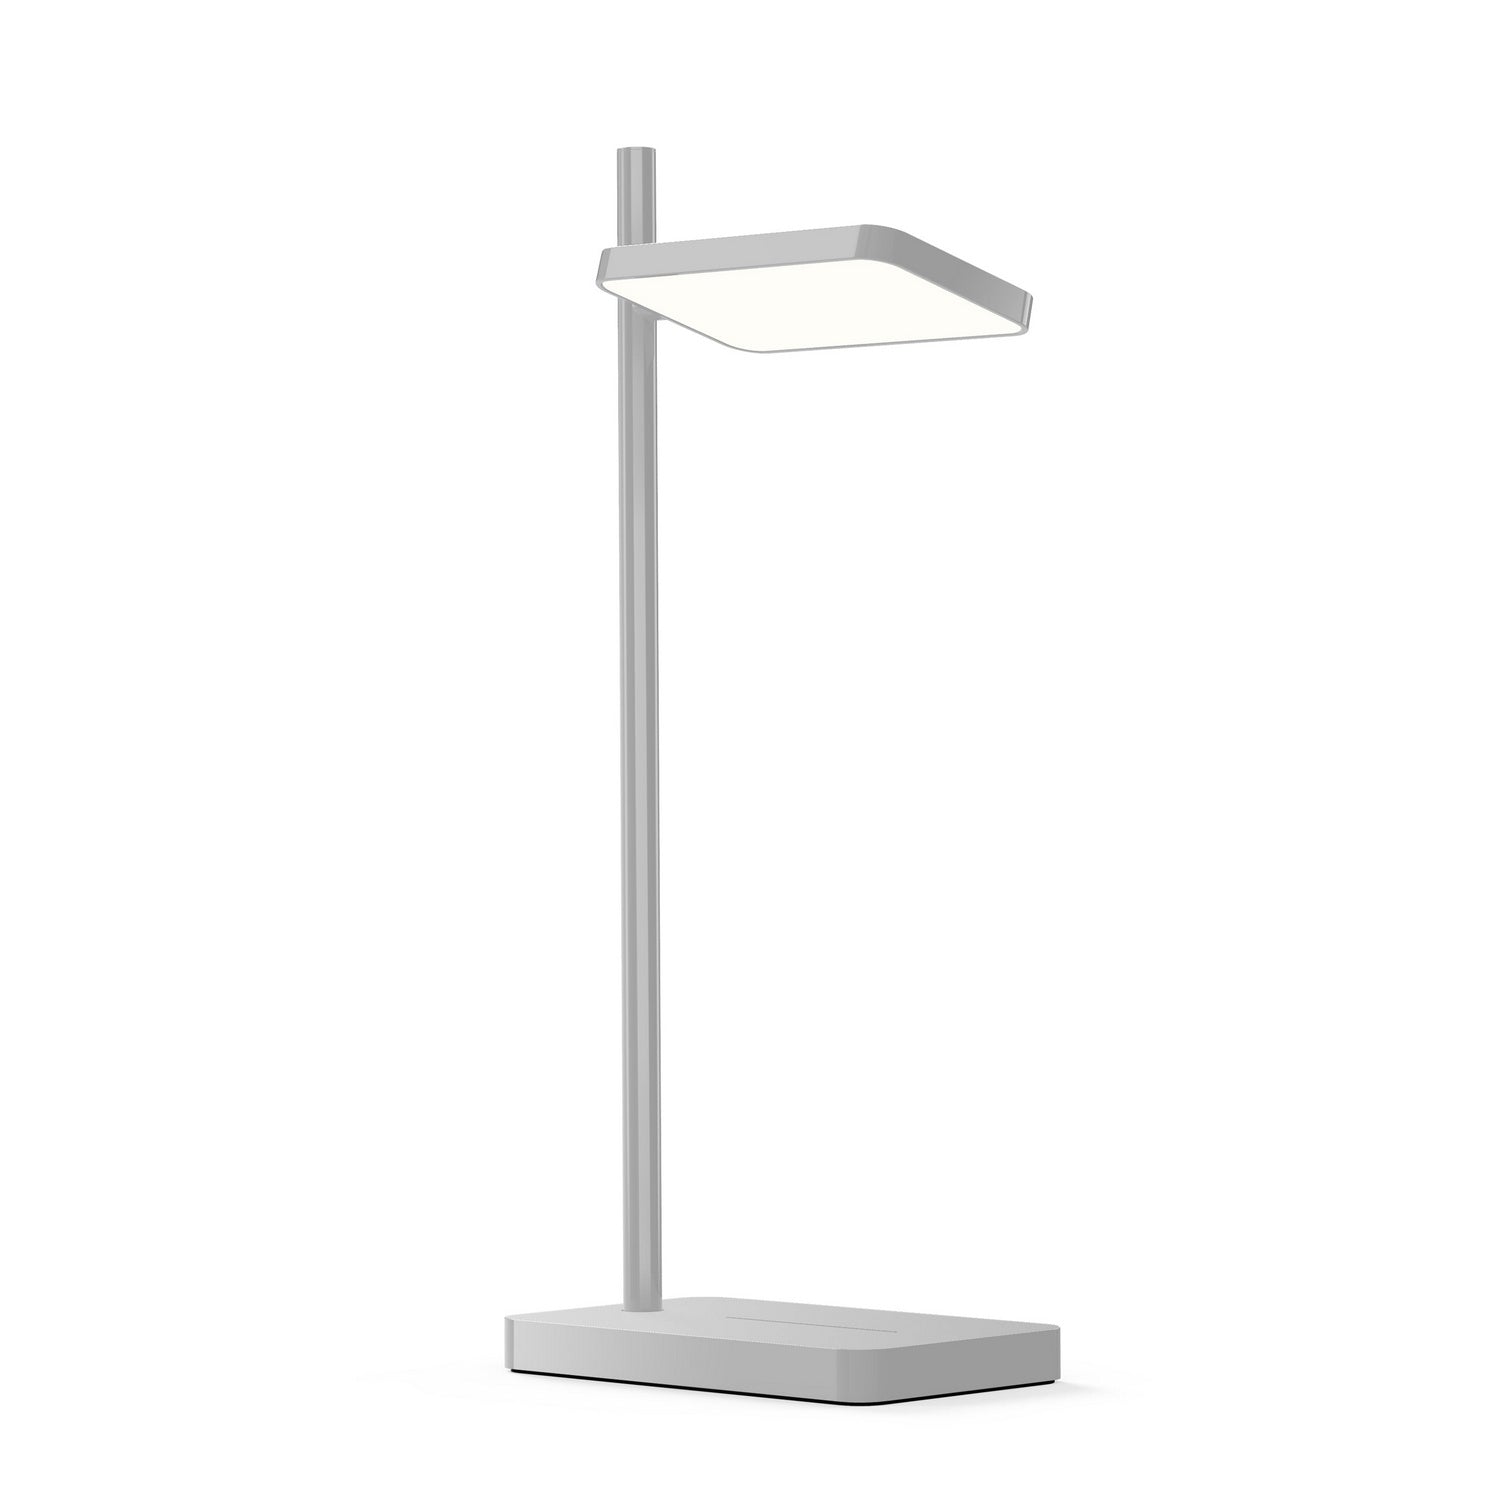 Pablo Designs - LED Table Lamp - Talia - Grey- Union Lighting Luminaires Decor